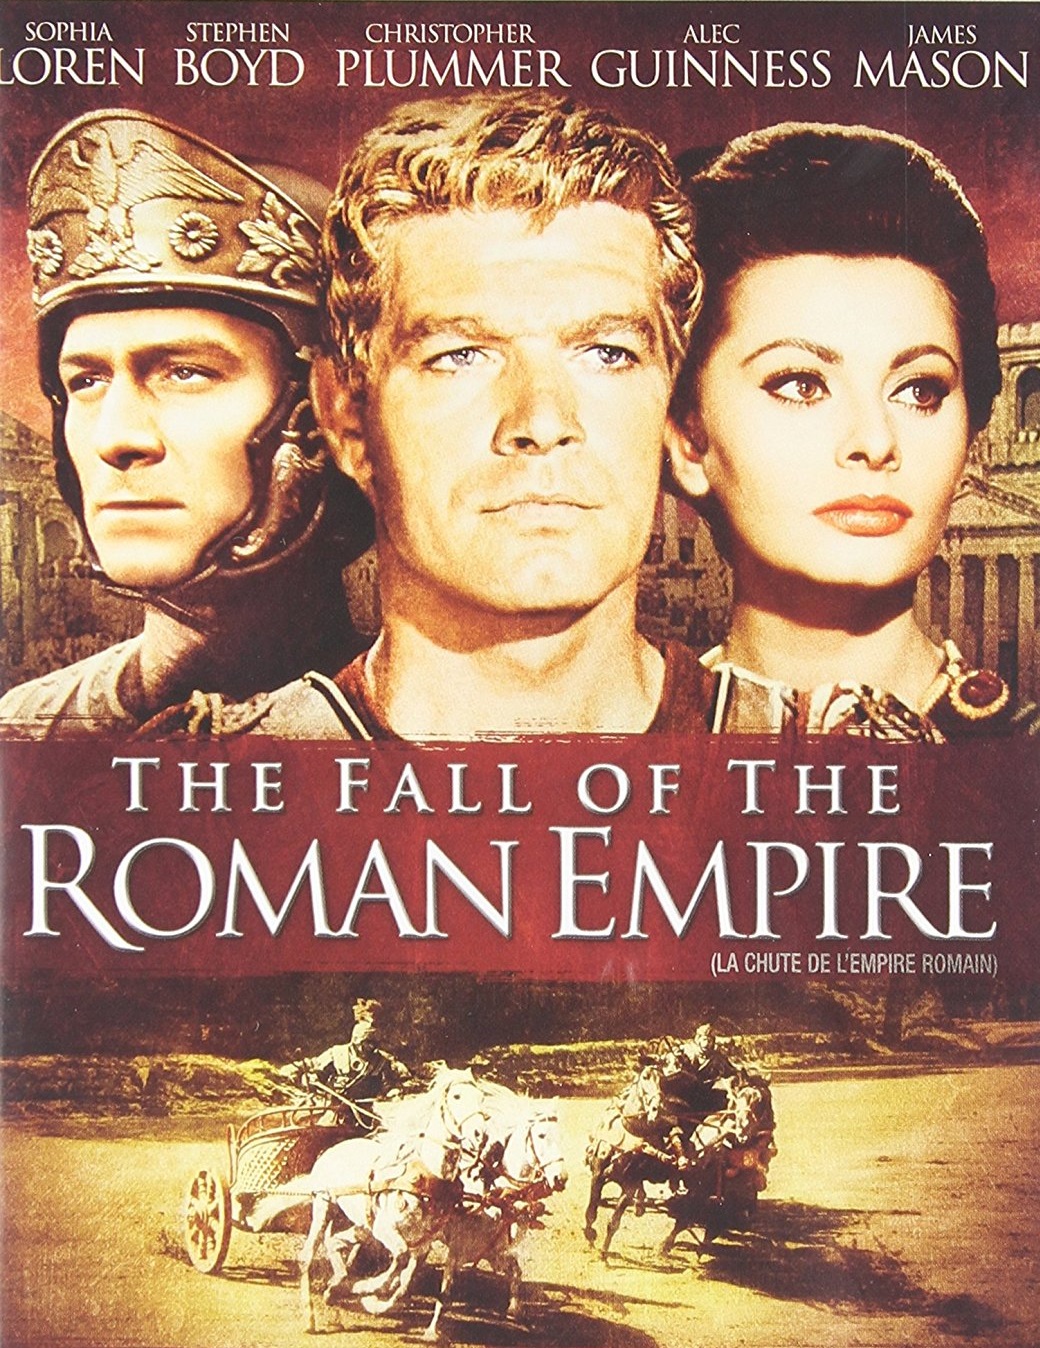 fall of the roman empire